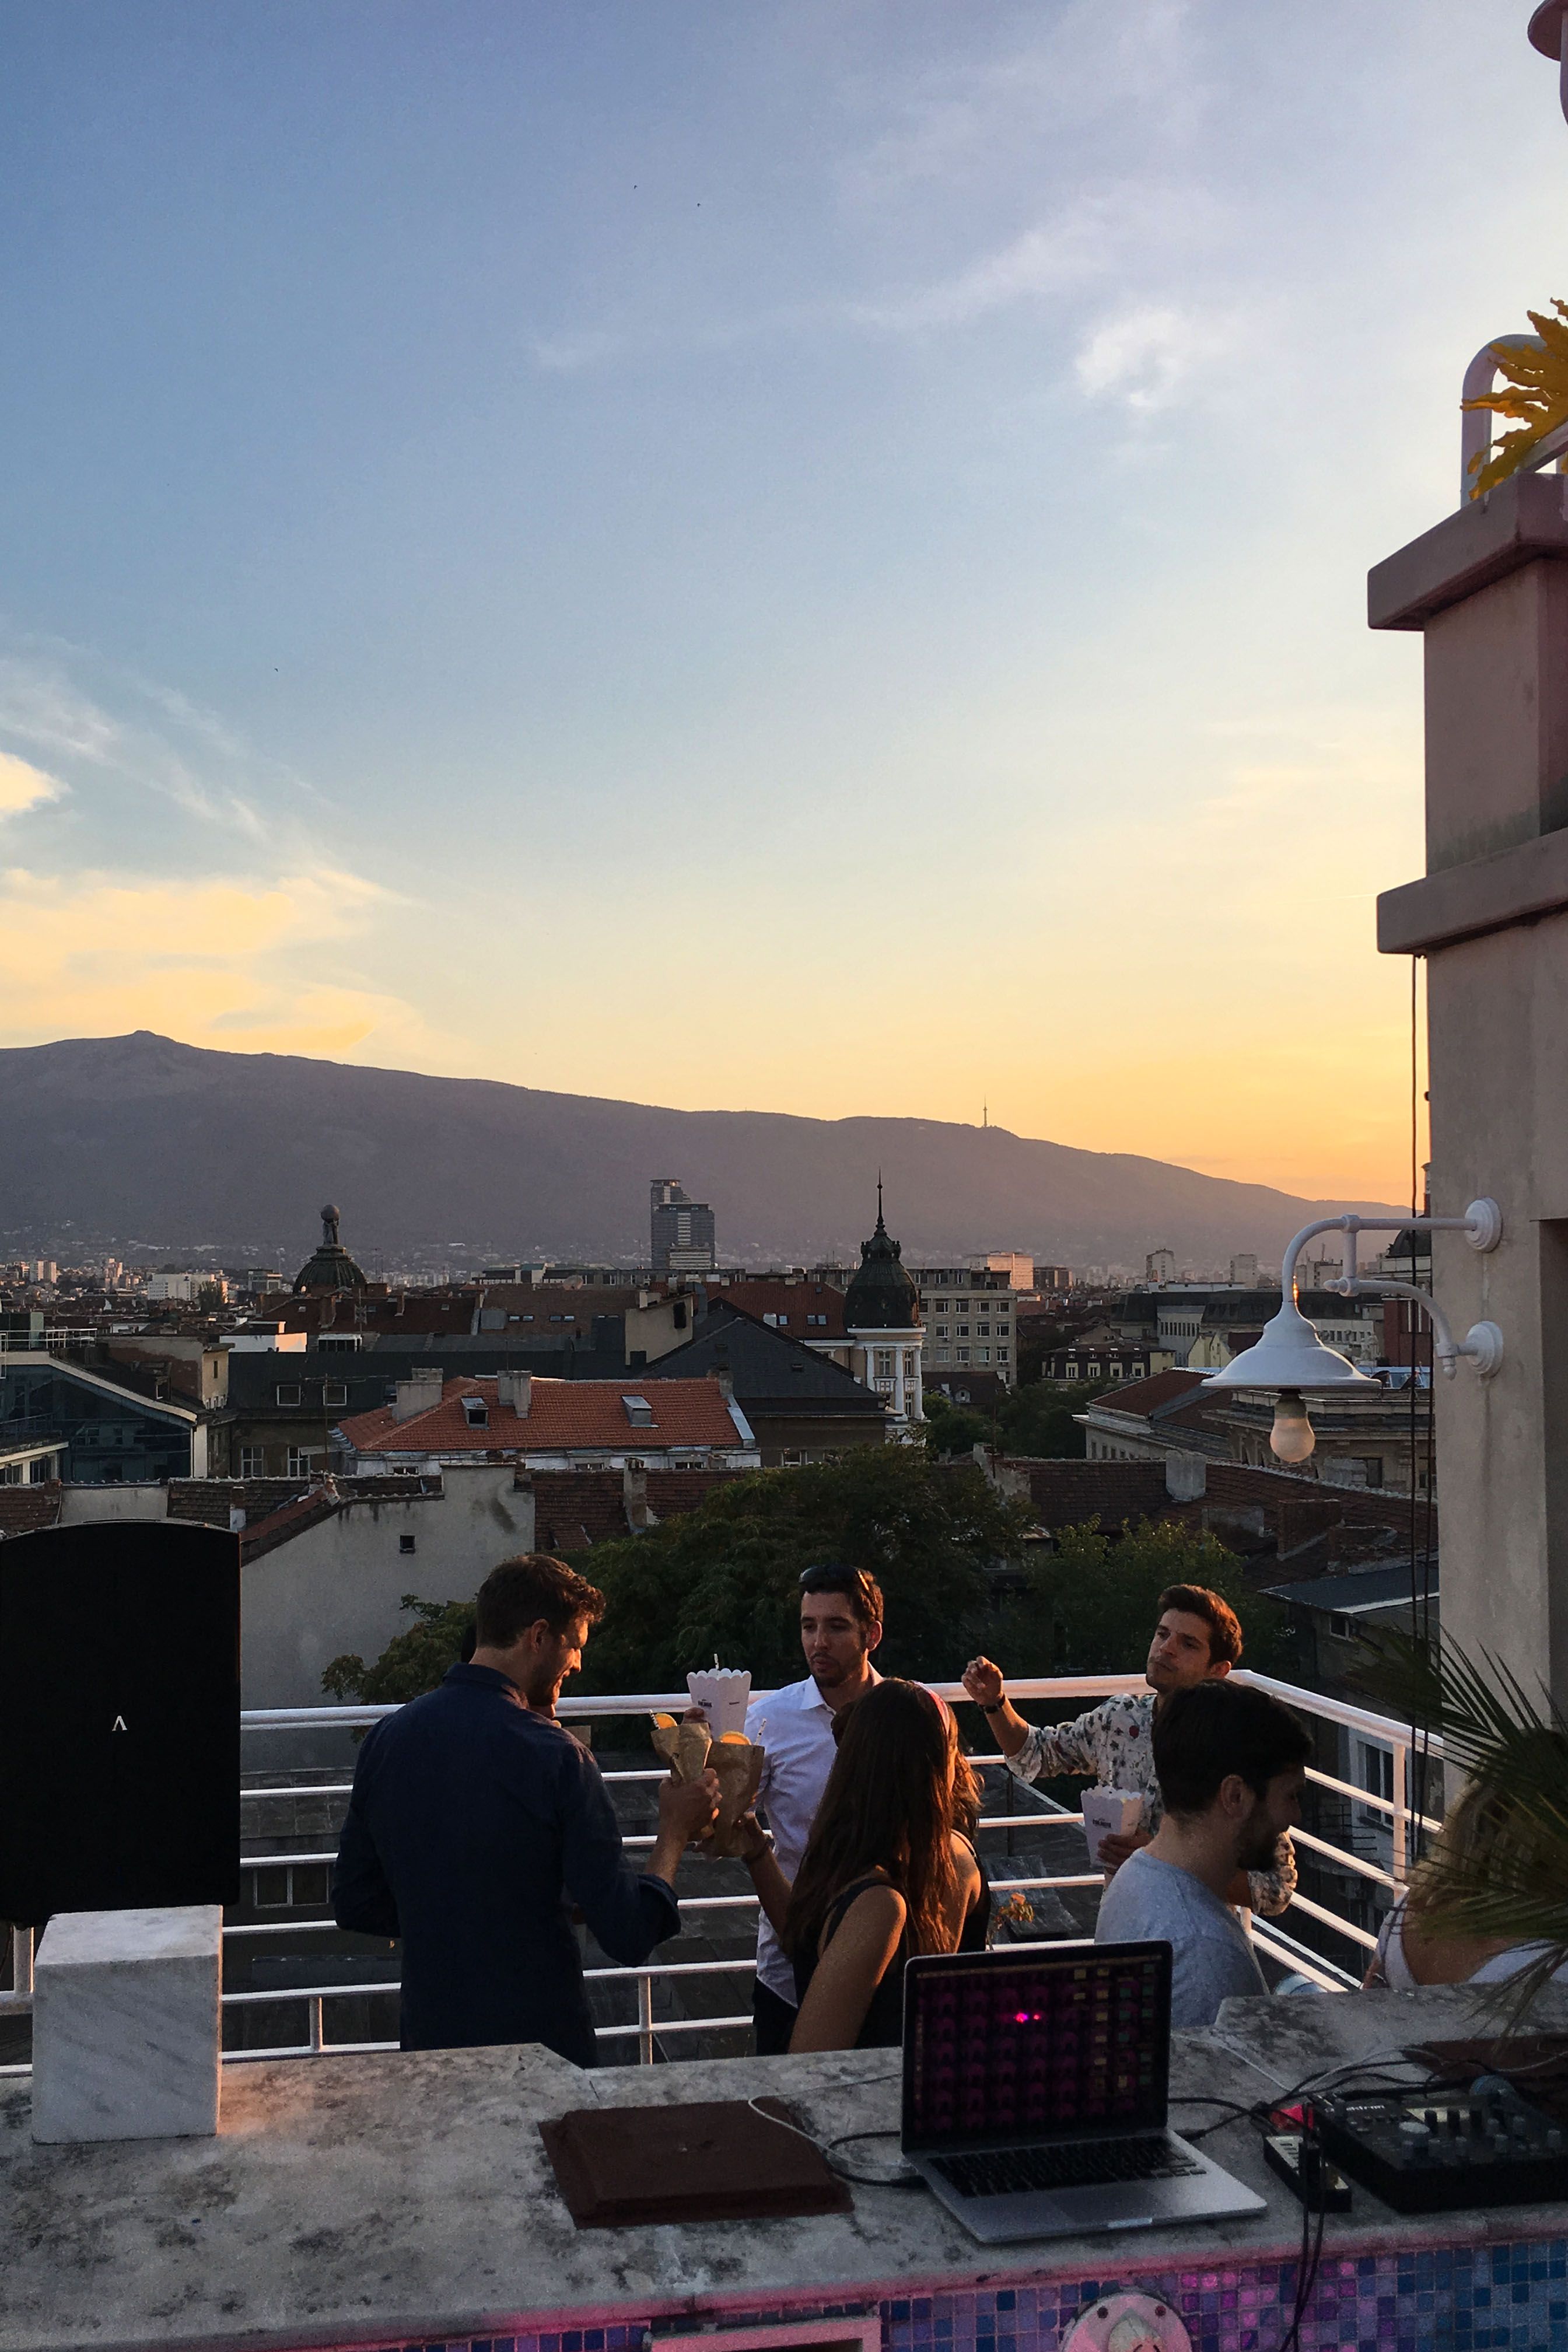 Sofia, Bulgaria, Travel Guide | LOOK WHAT I MADE ...